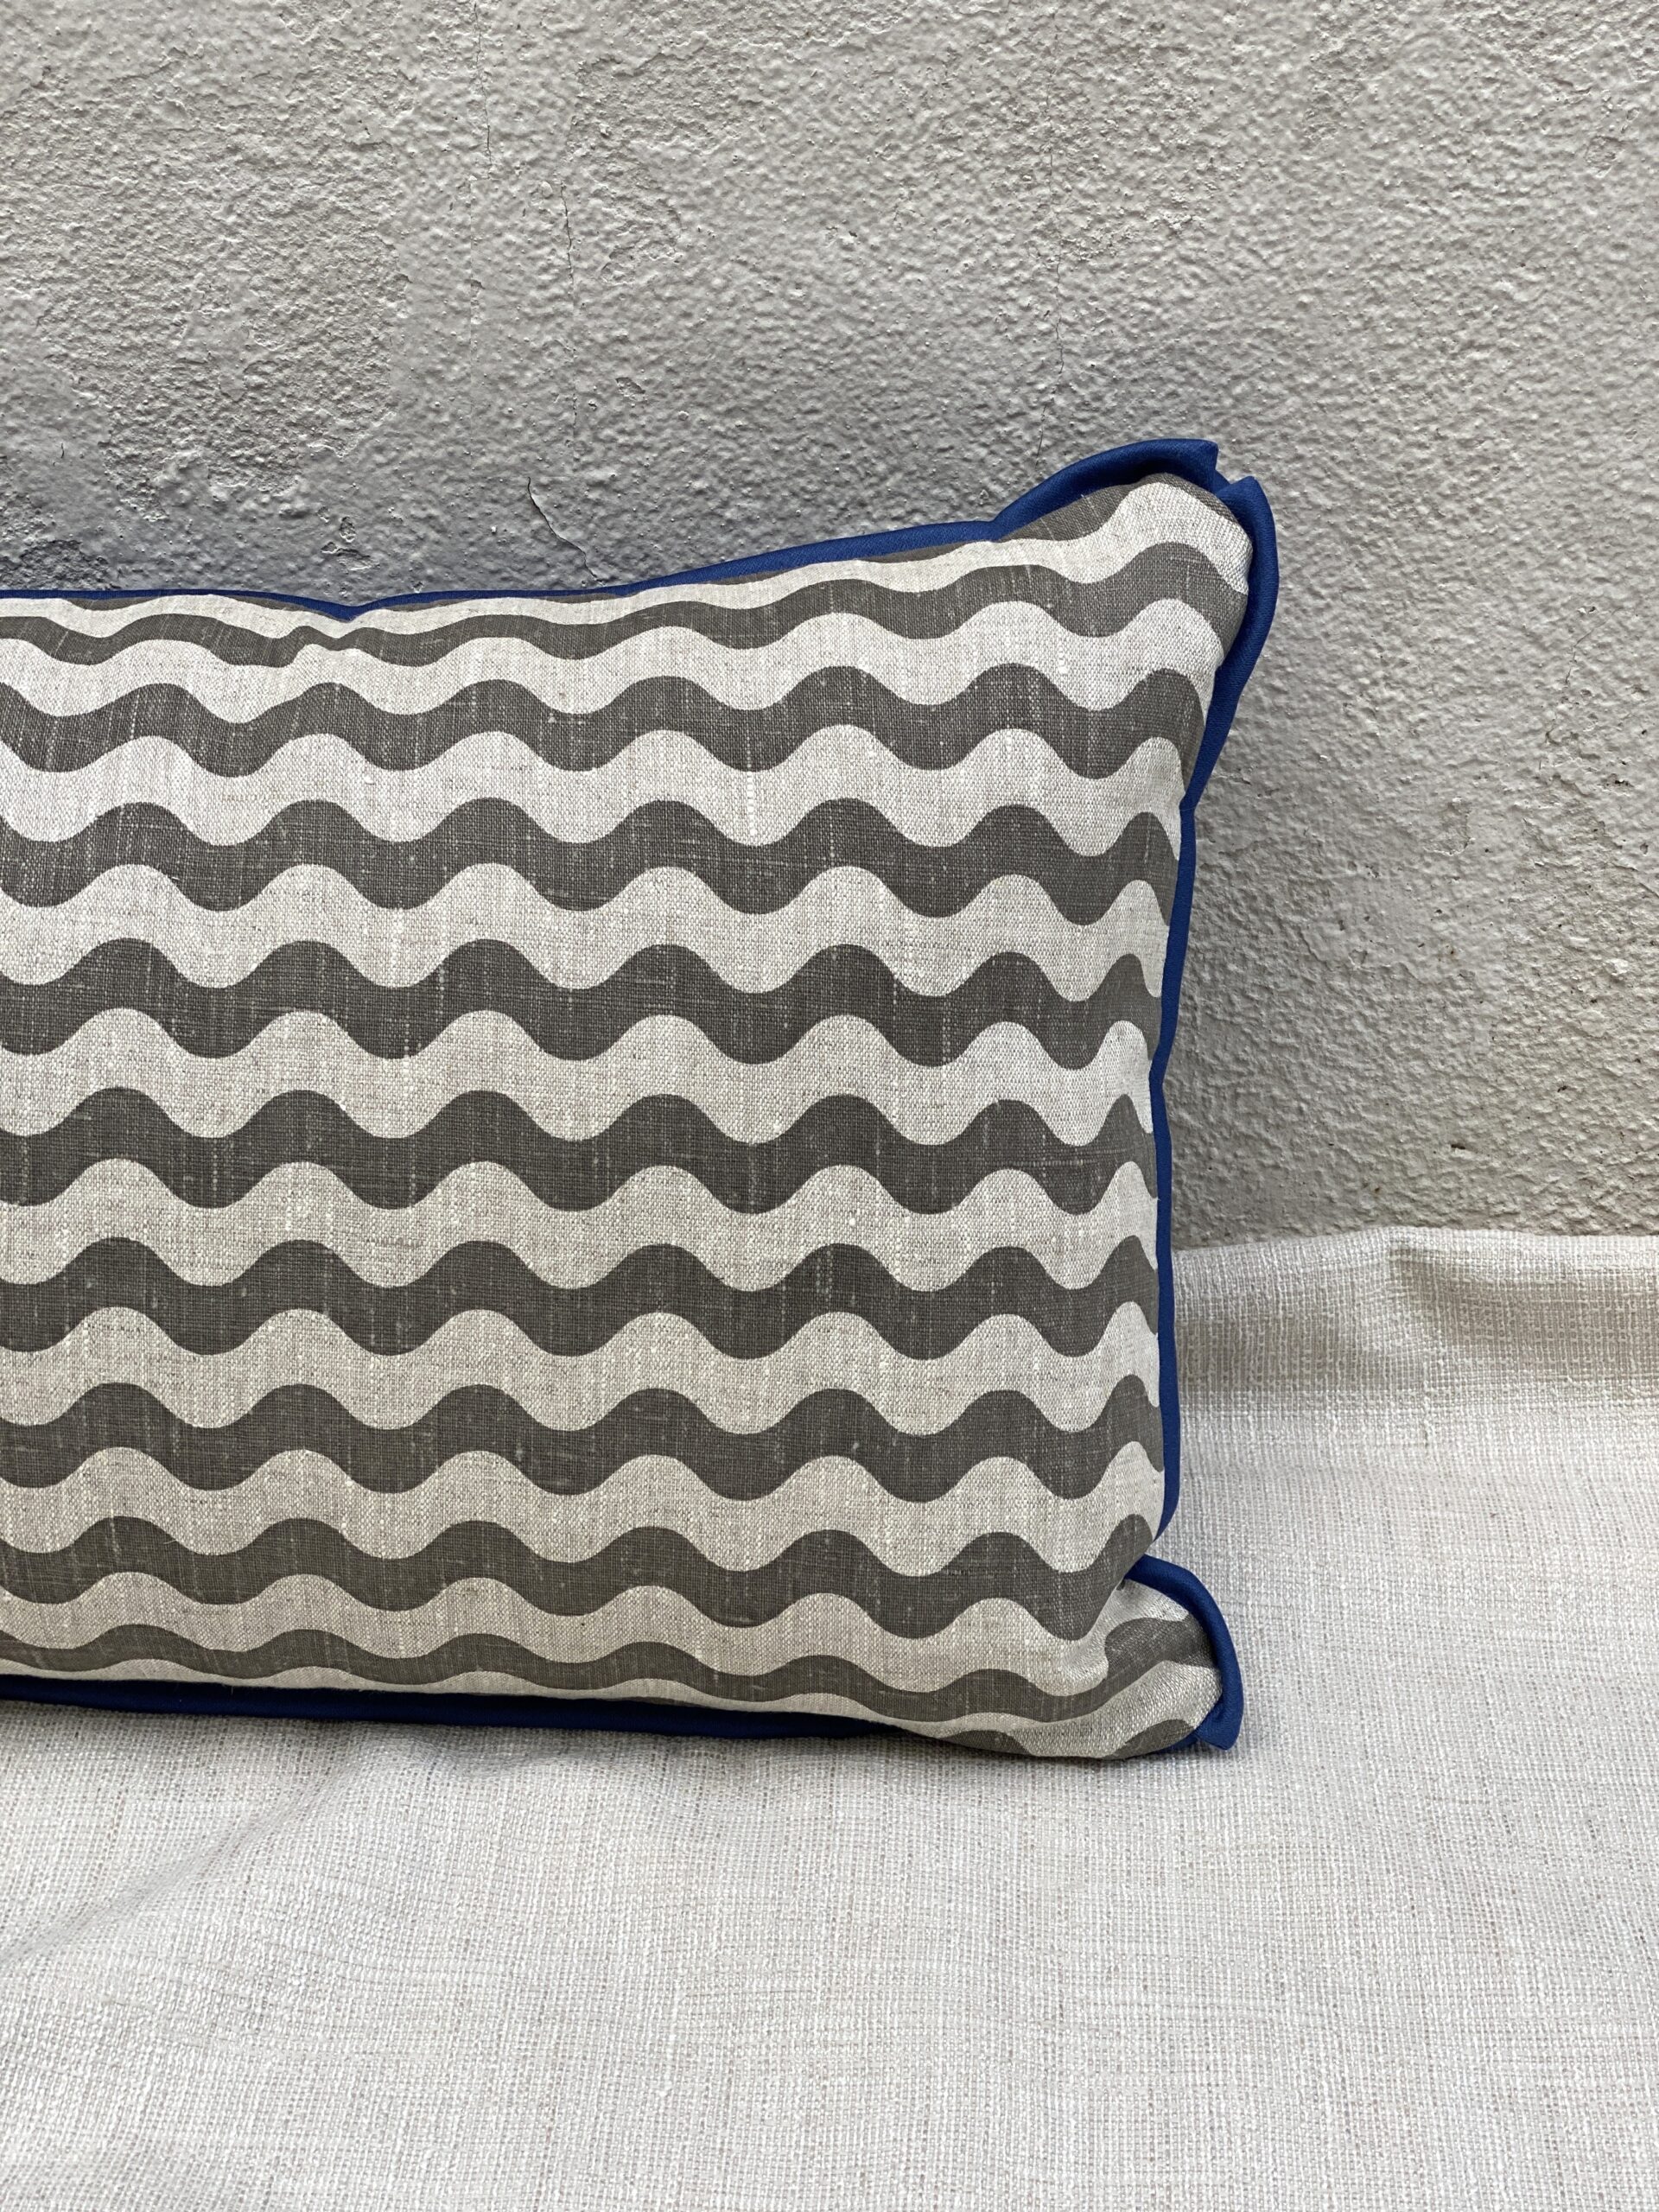 Studio Book Wave Stripe Pillows